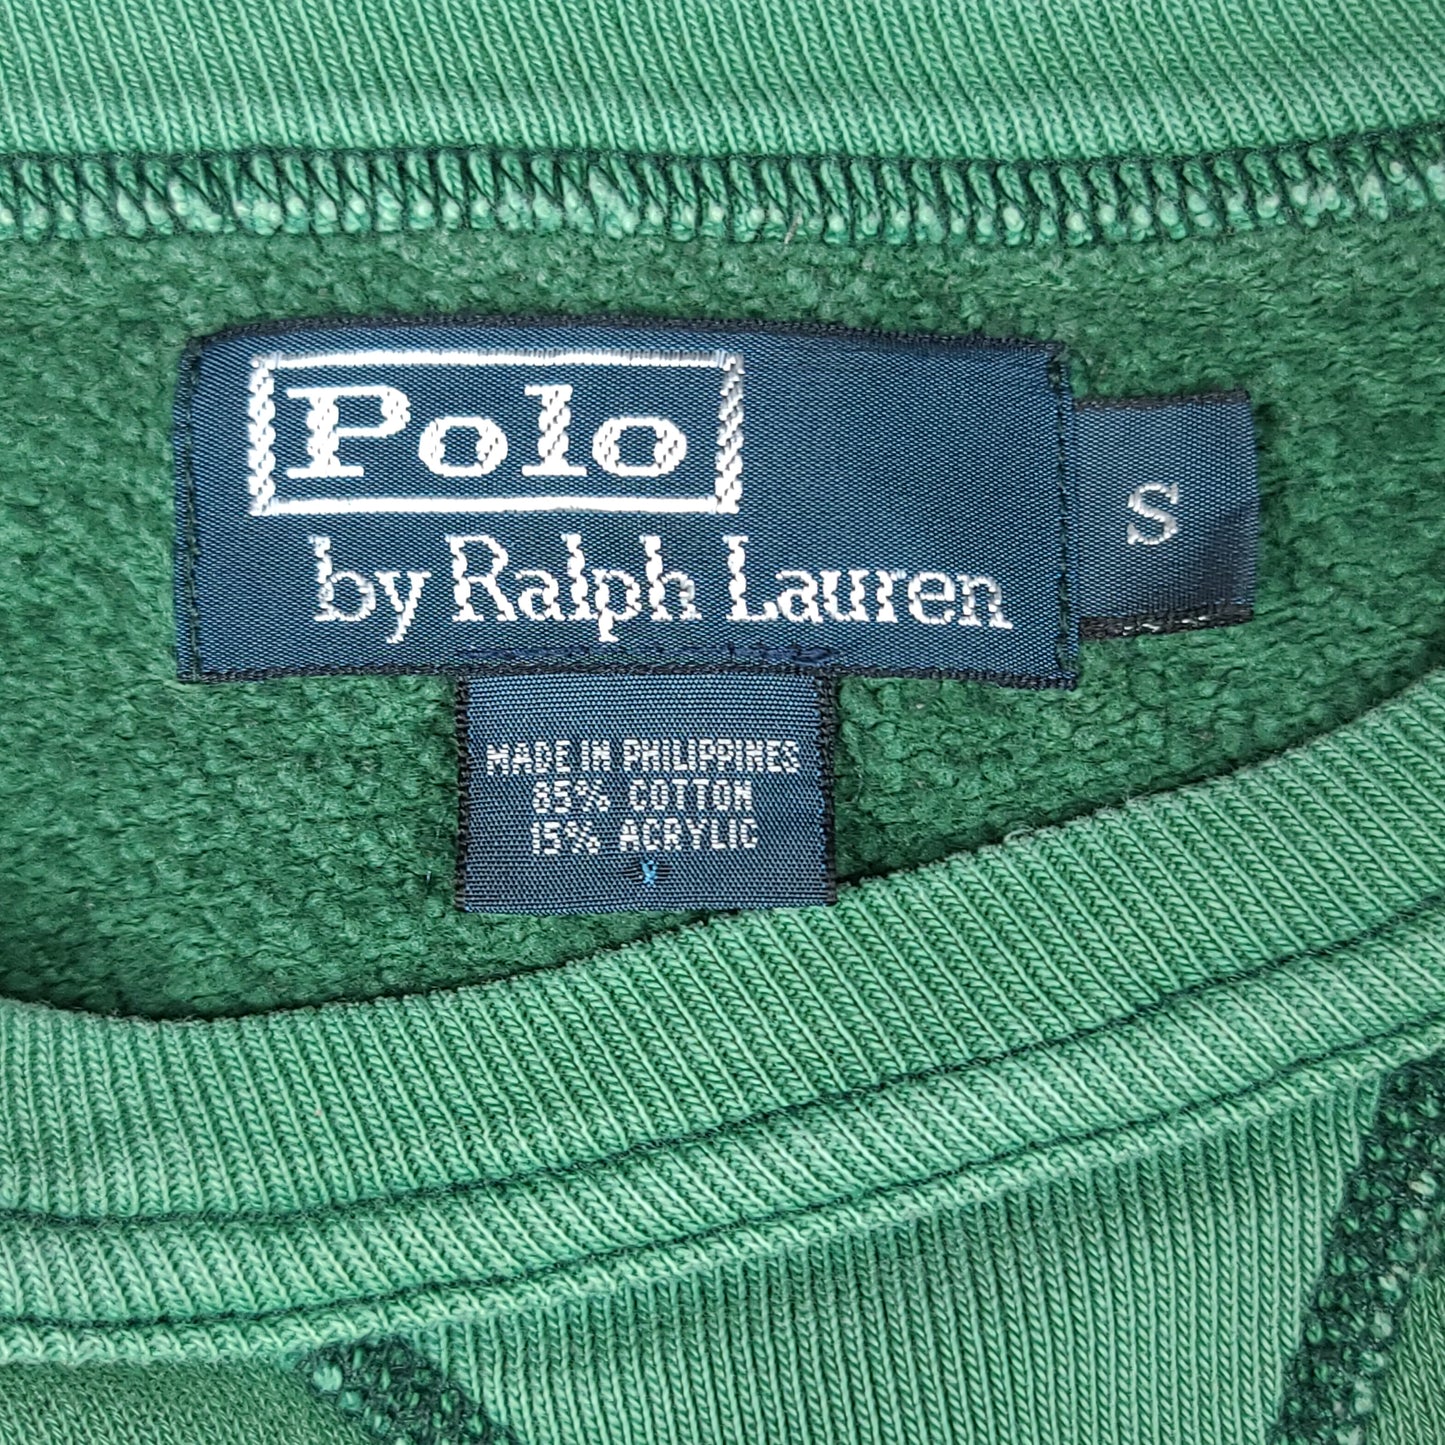 Vintage Polo Ralph Lauren Indian Springs Green Sweatshirt